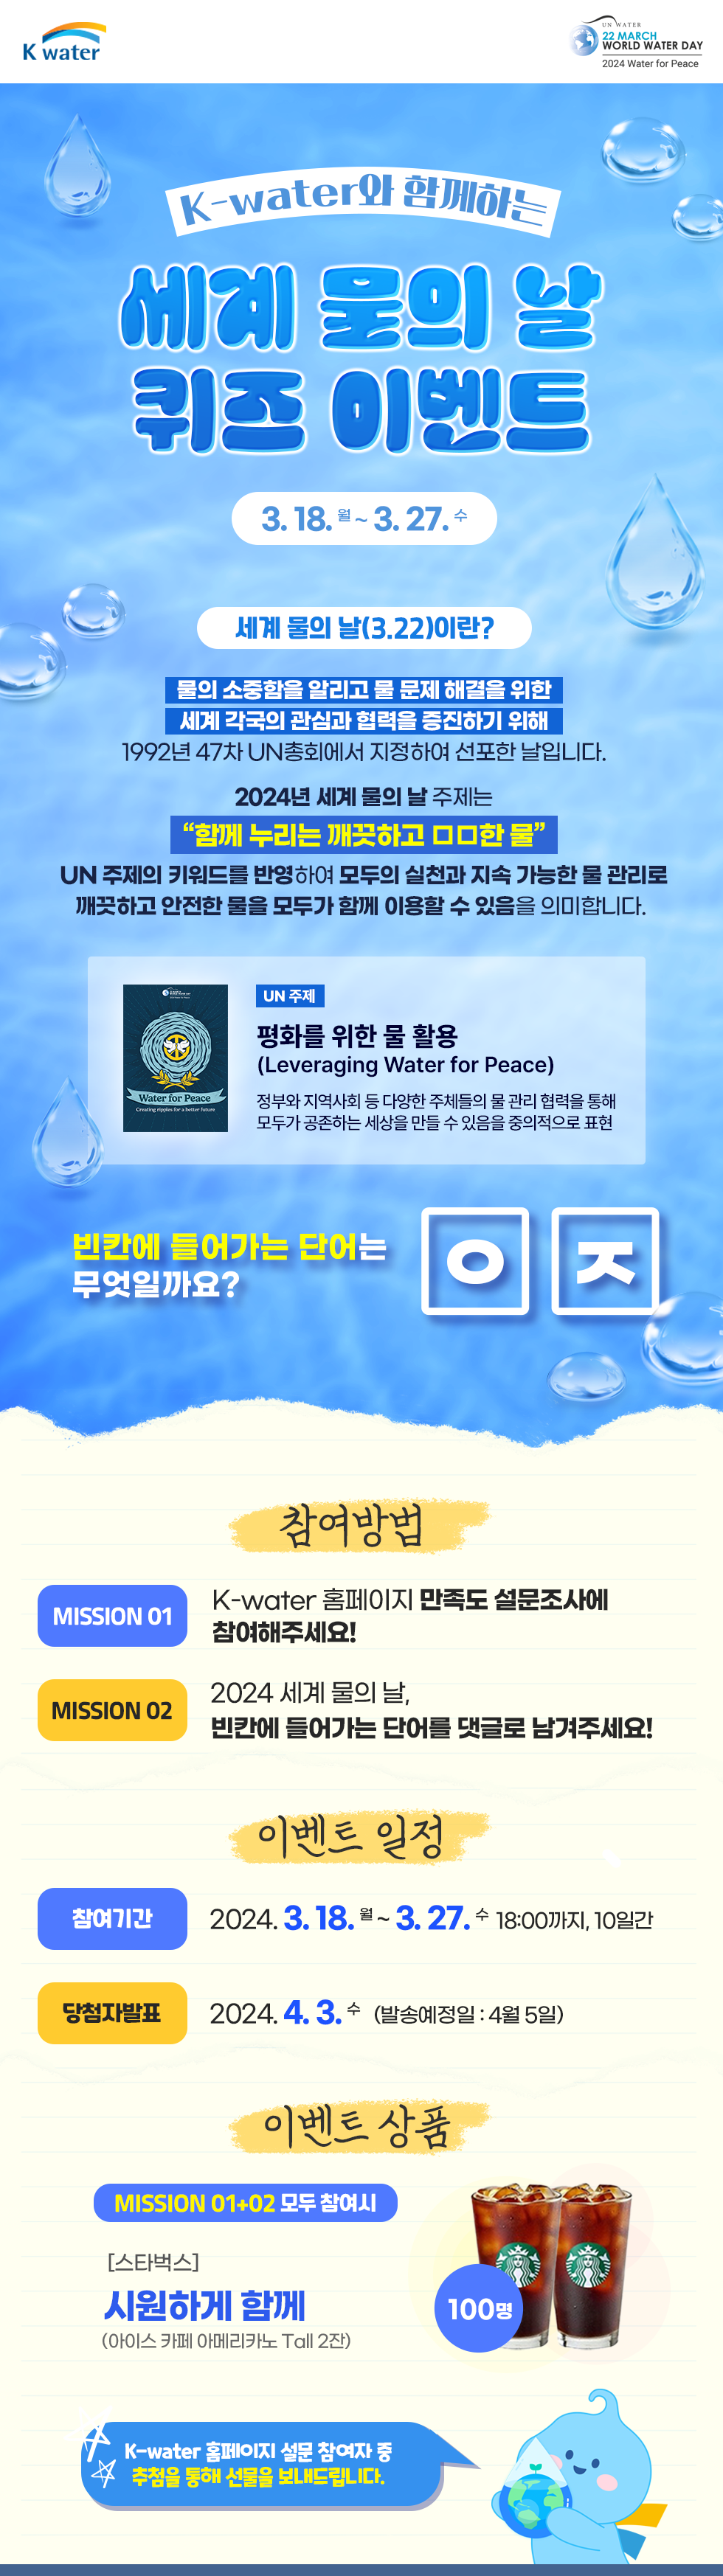 K-water와 함께하는 세계 물의 날 퀴즈 이벤트 3.18. - 3.27.